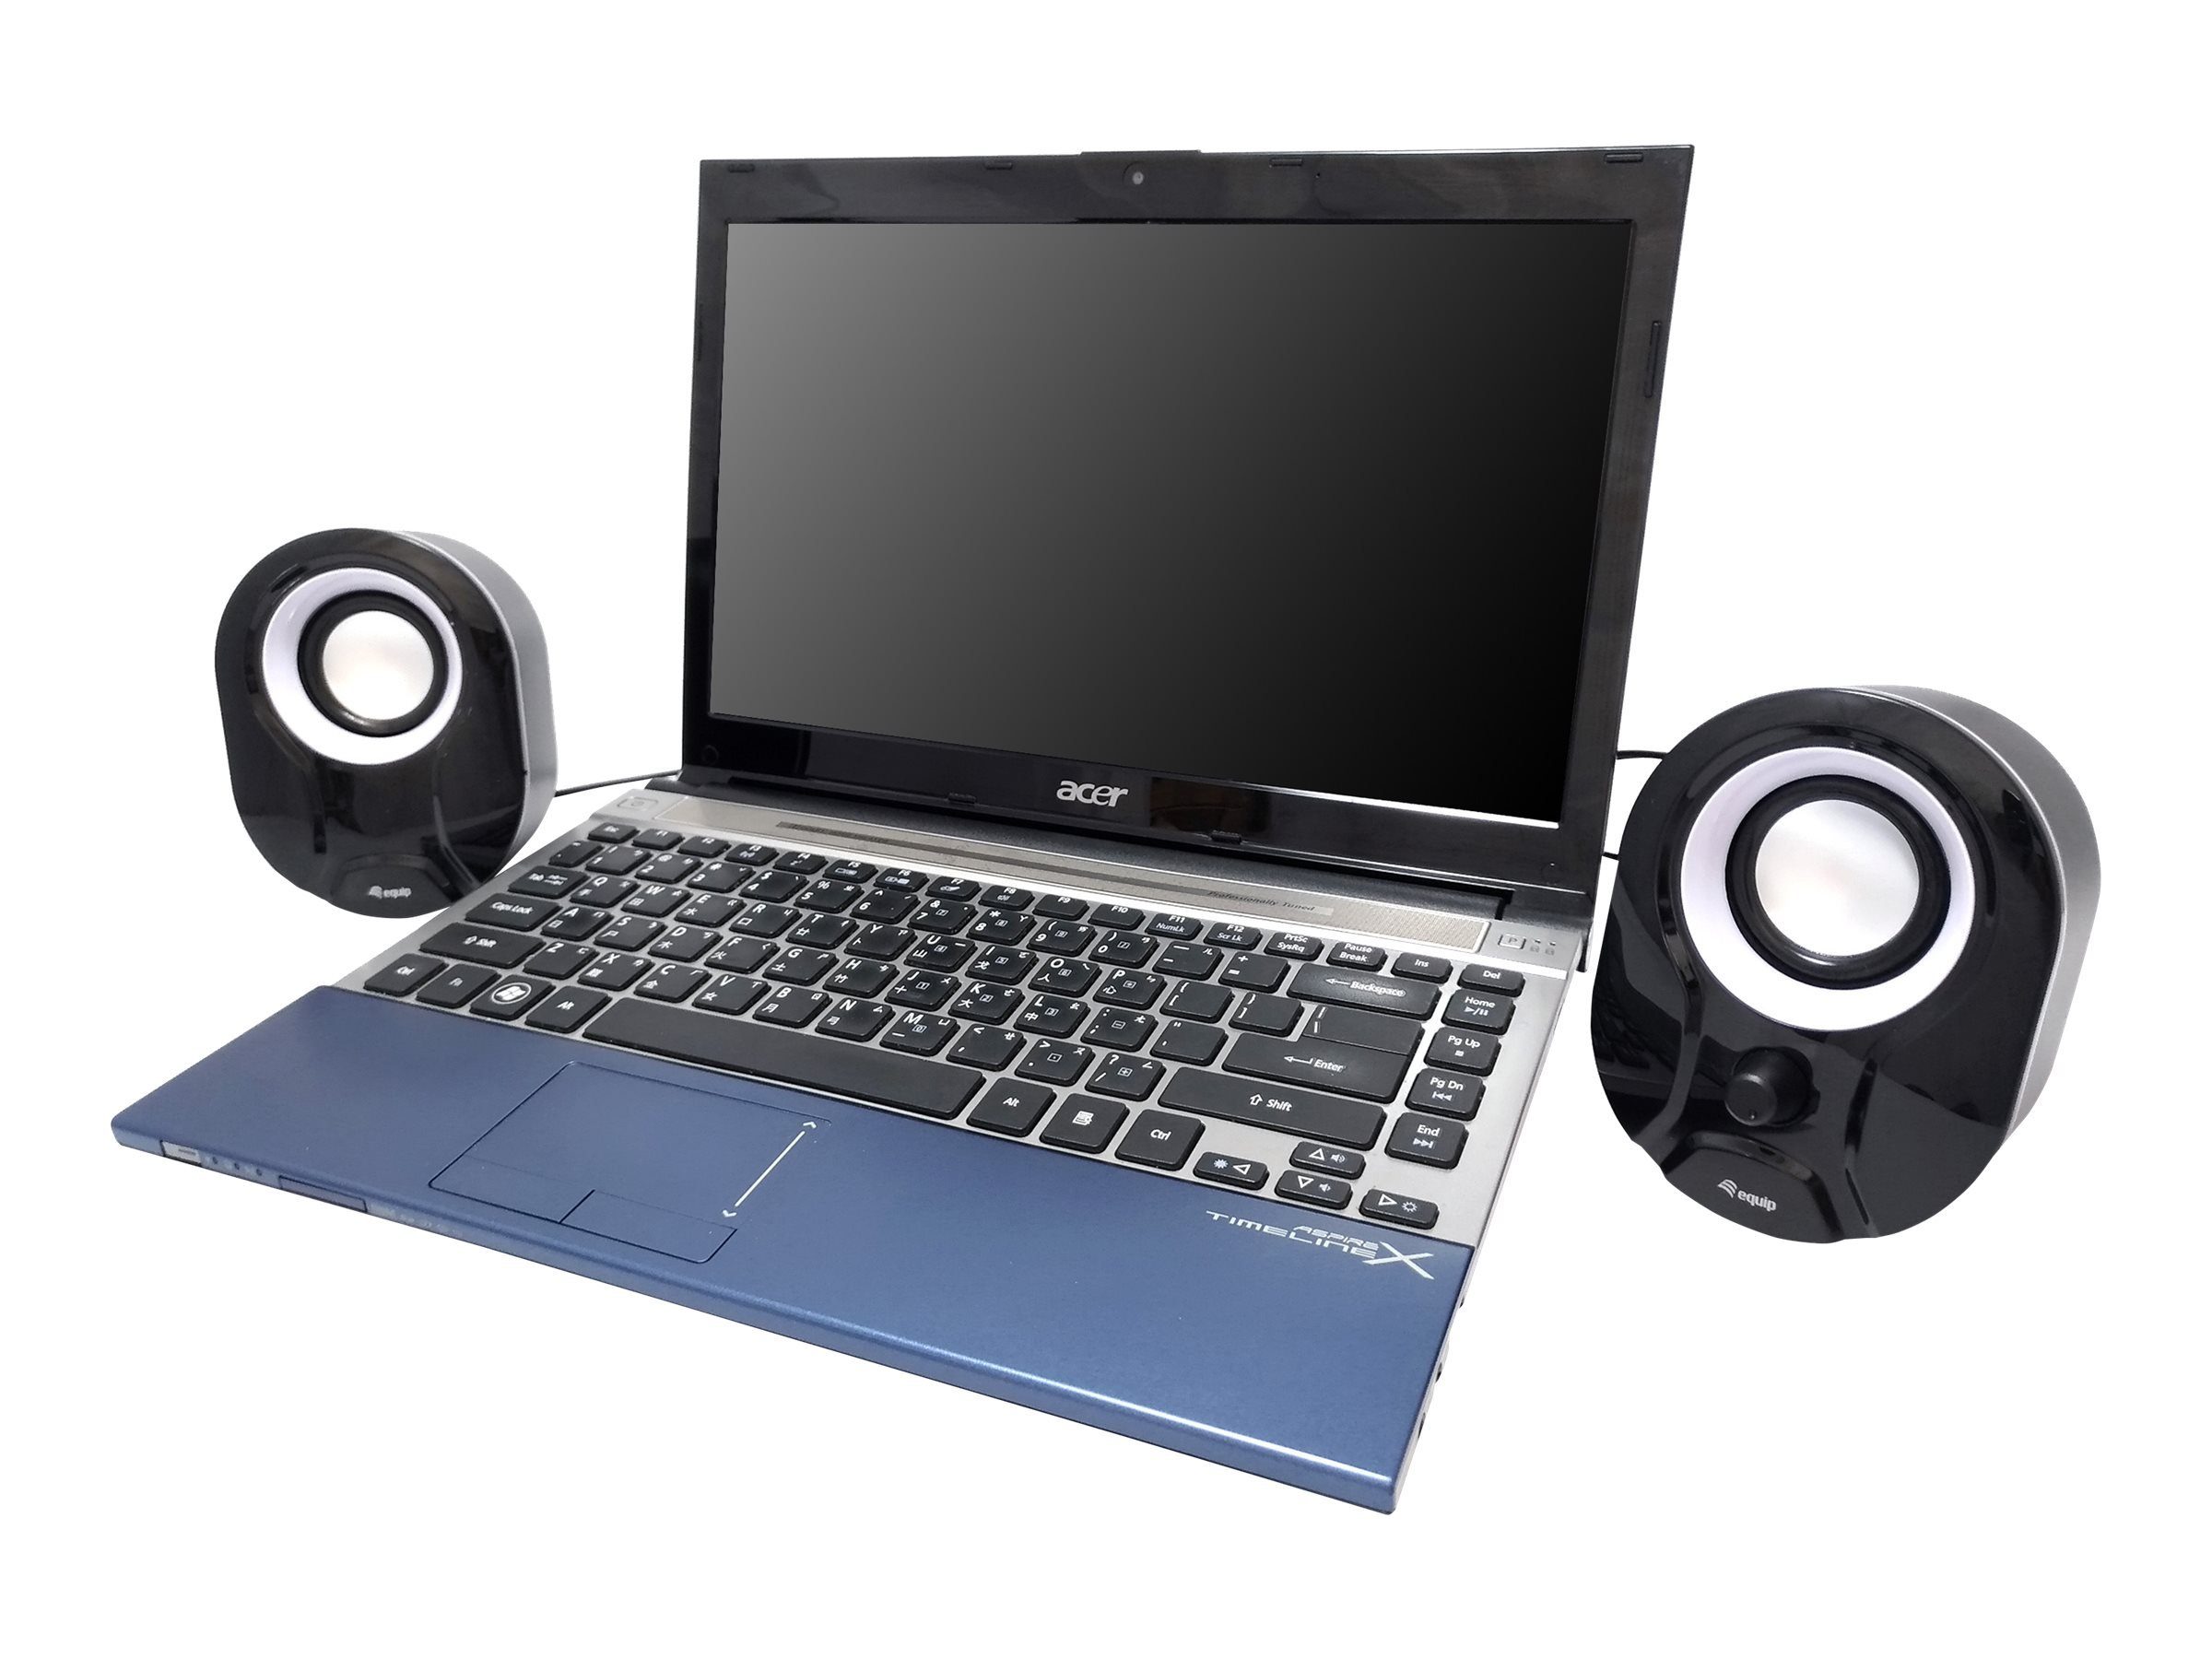 DATA DIGITAL f. Notebook PC-Lautsprecher u. EQUIP PC, Stereo Lautsprecher 2.0 schwarz/wei